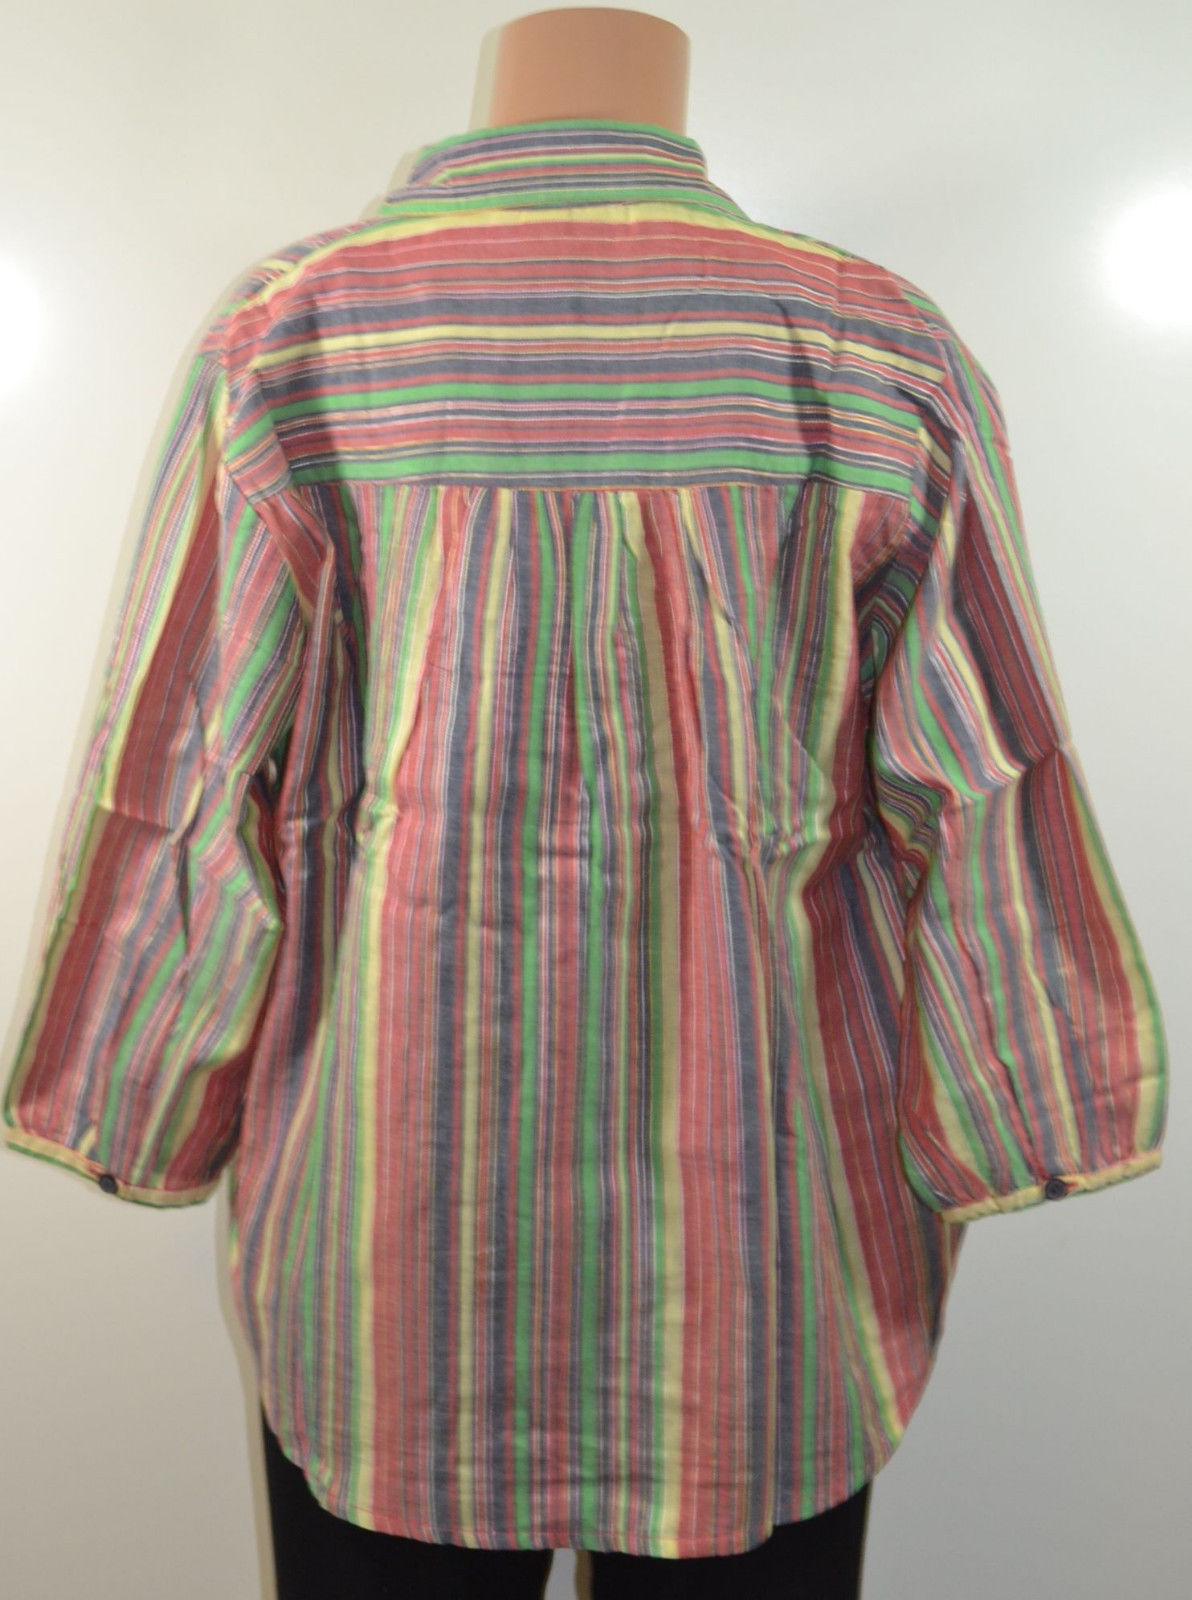 Dress Barn Women S Plus Size Striped Shirt 2 And 28 Similar Items